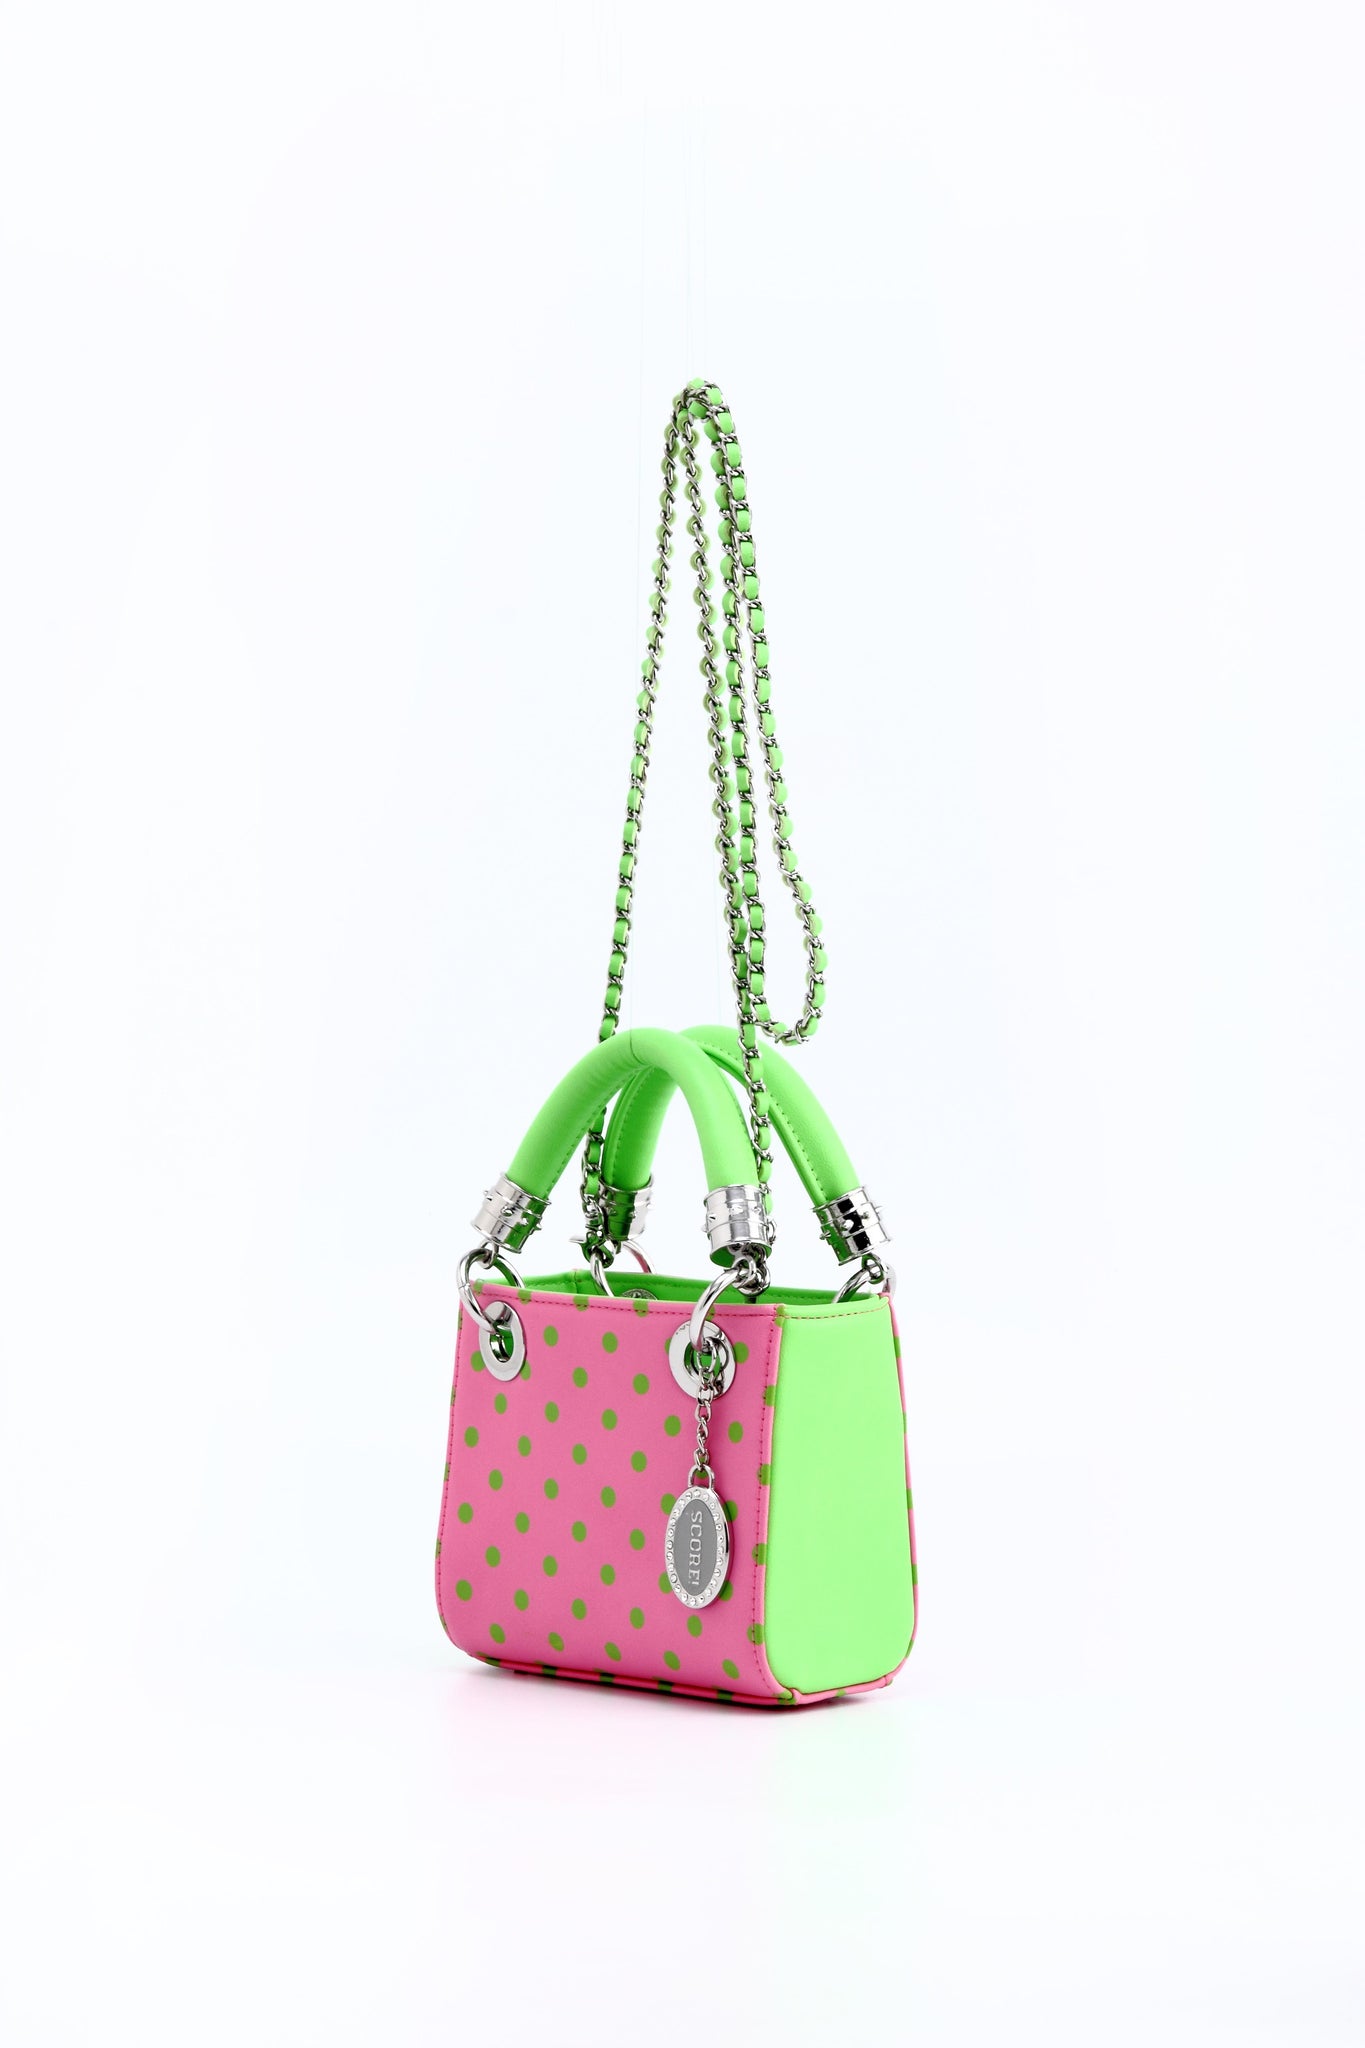 Aka Sorority Gifts: Stylish Clutch Purse in Pink and Green